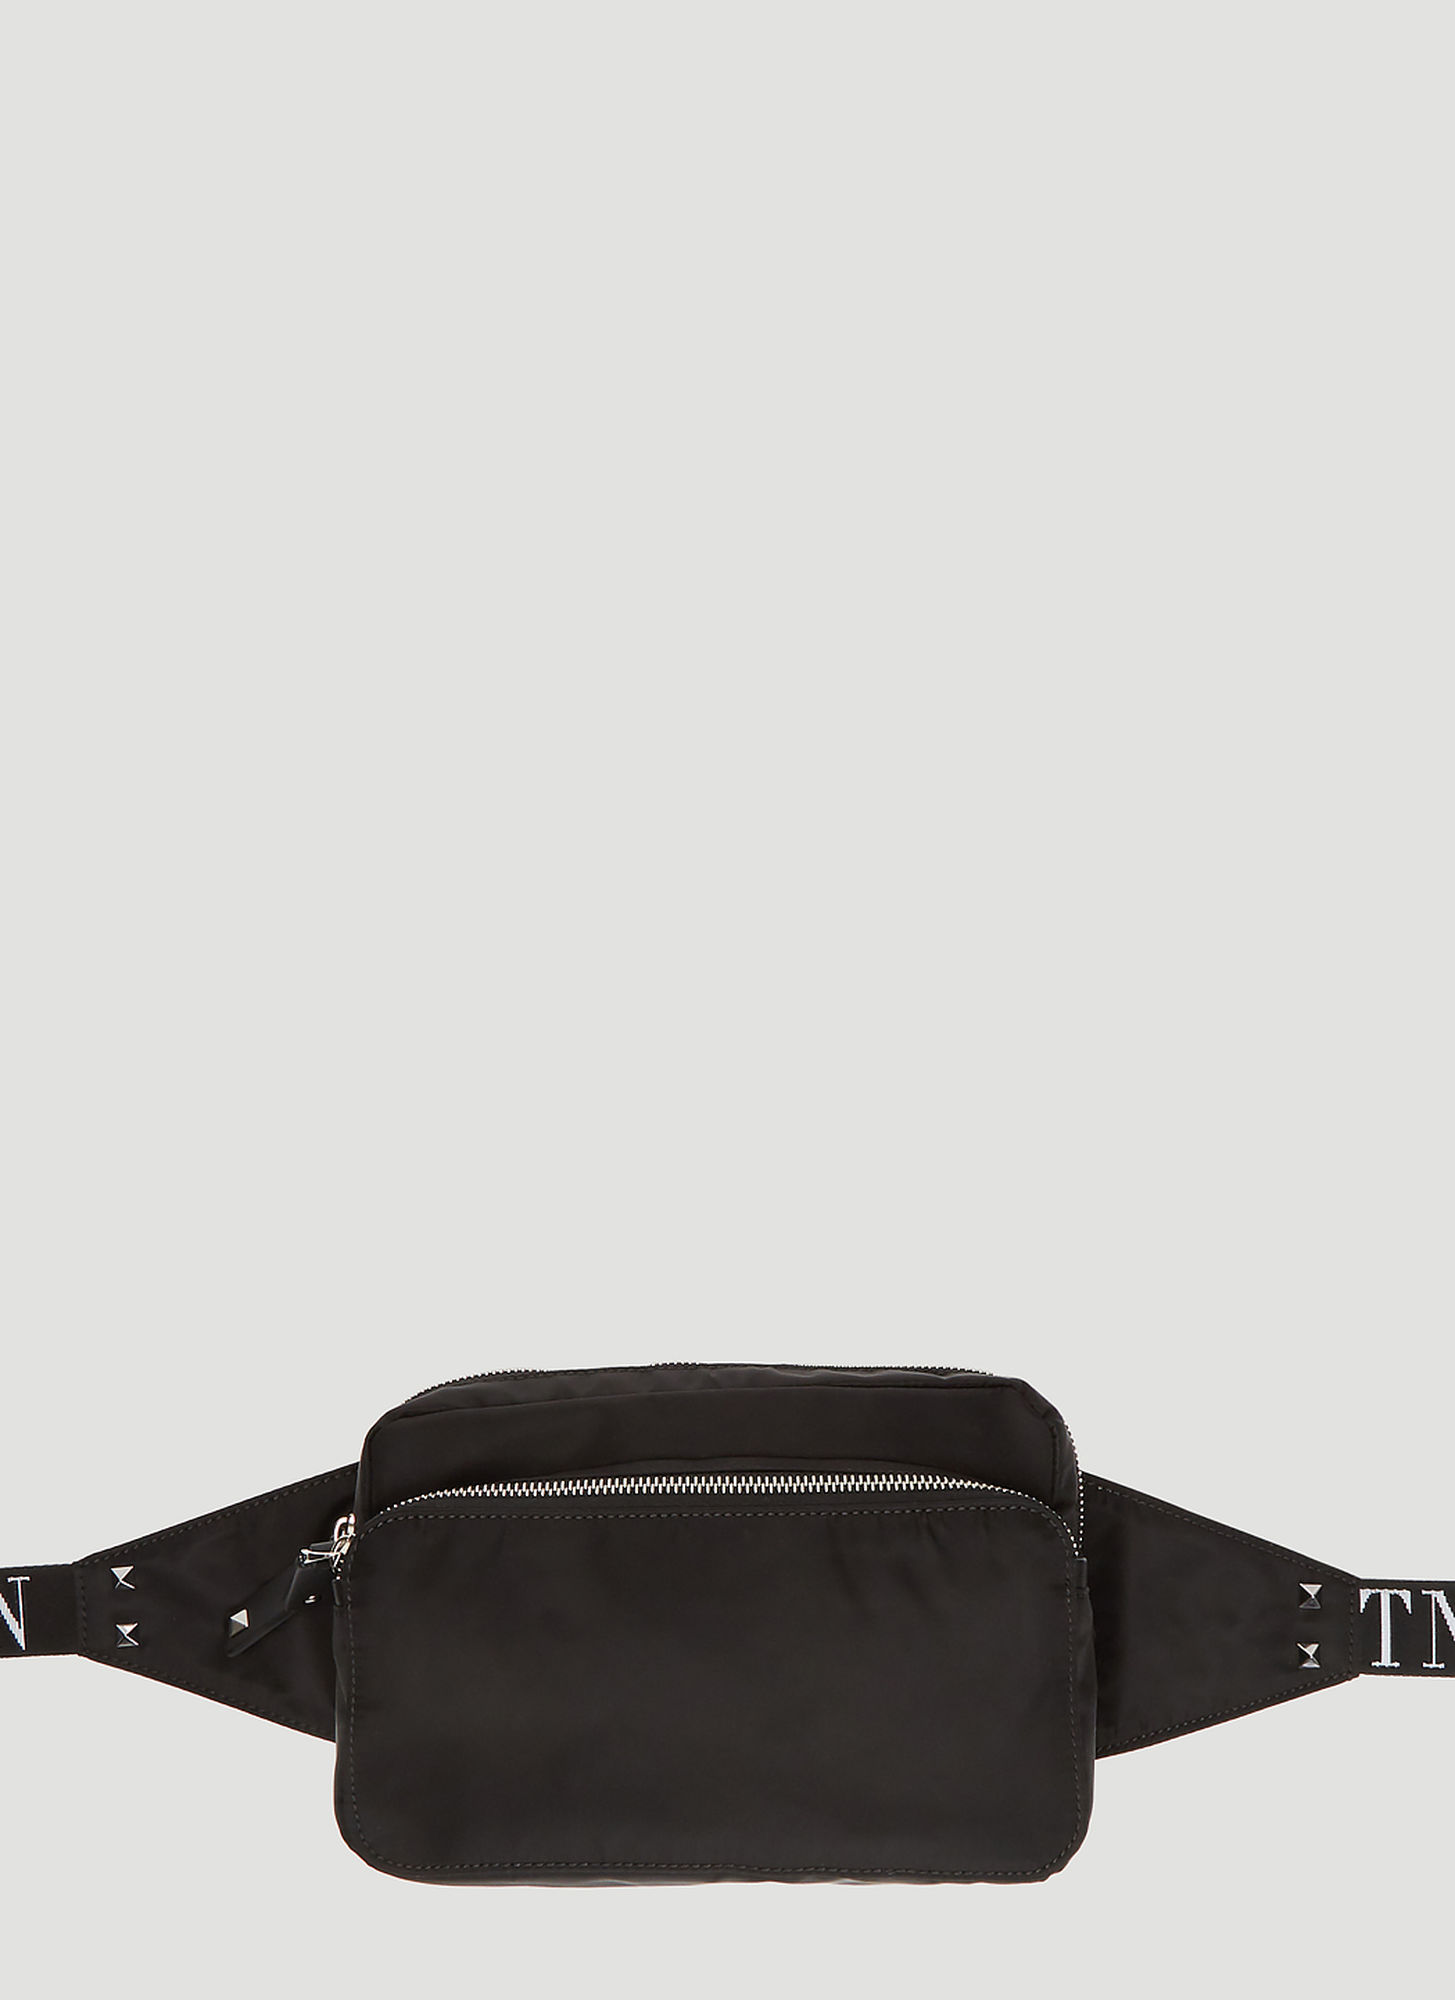 Valentino VLTN Belt Bag in Black size One Size | The Fashionisto